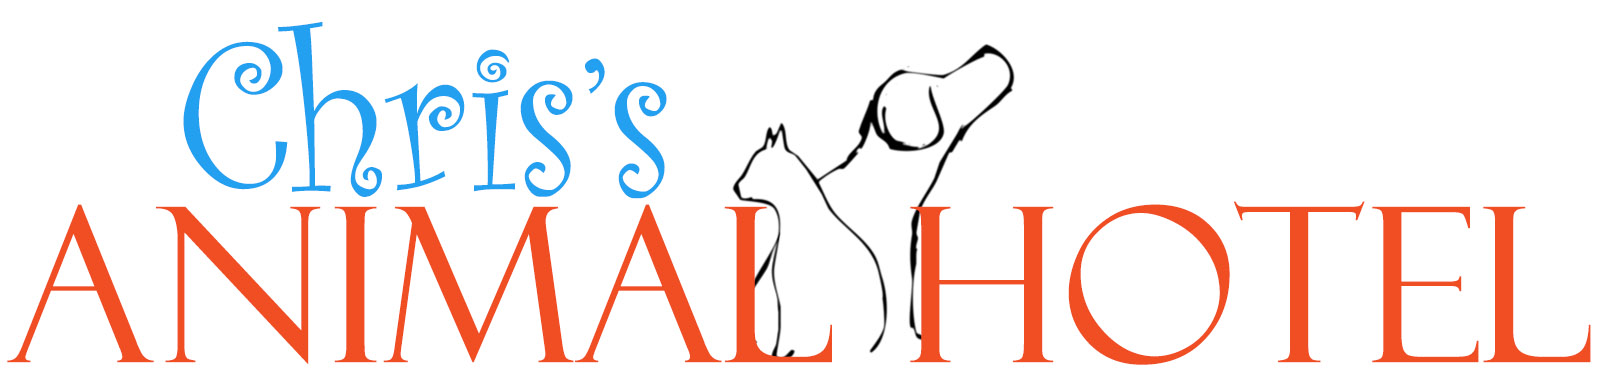 Chris's Animal Hotel Logo Image